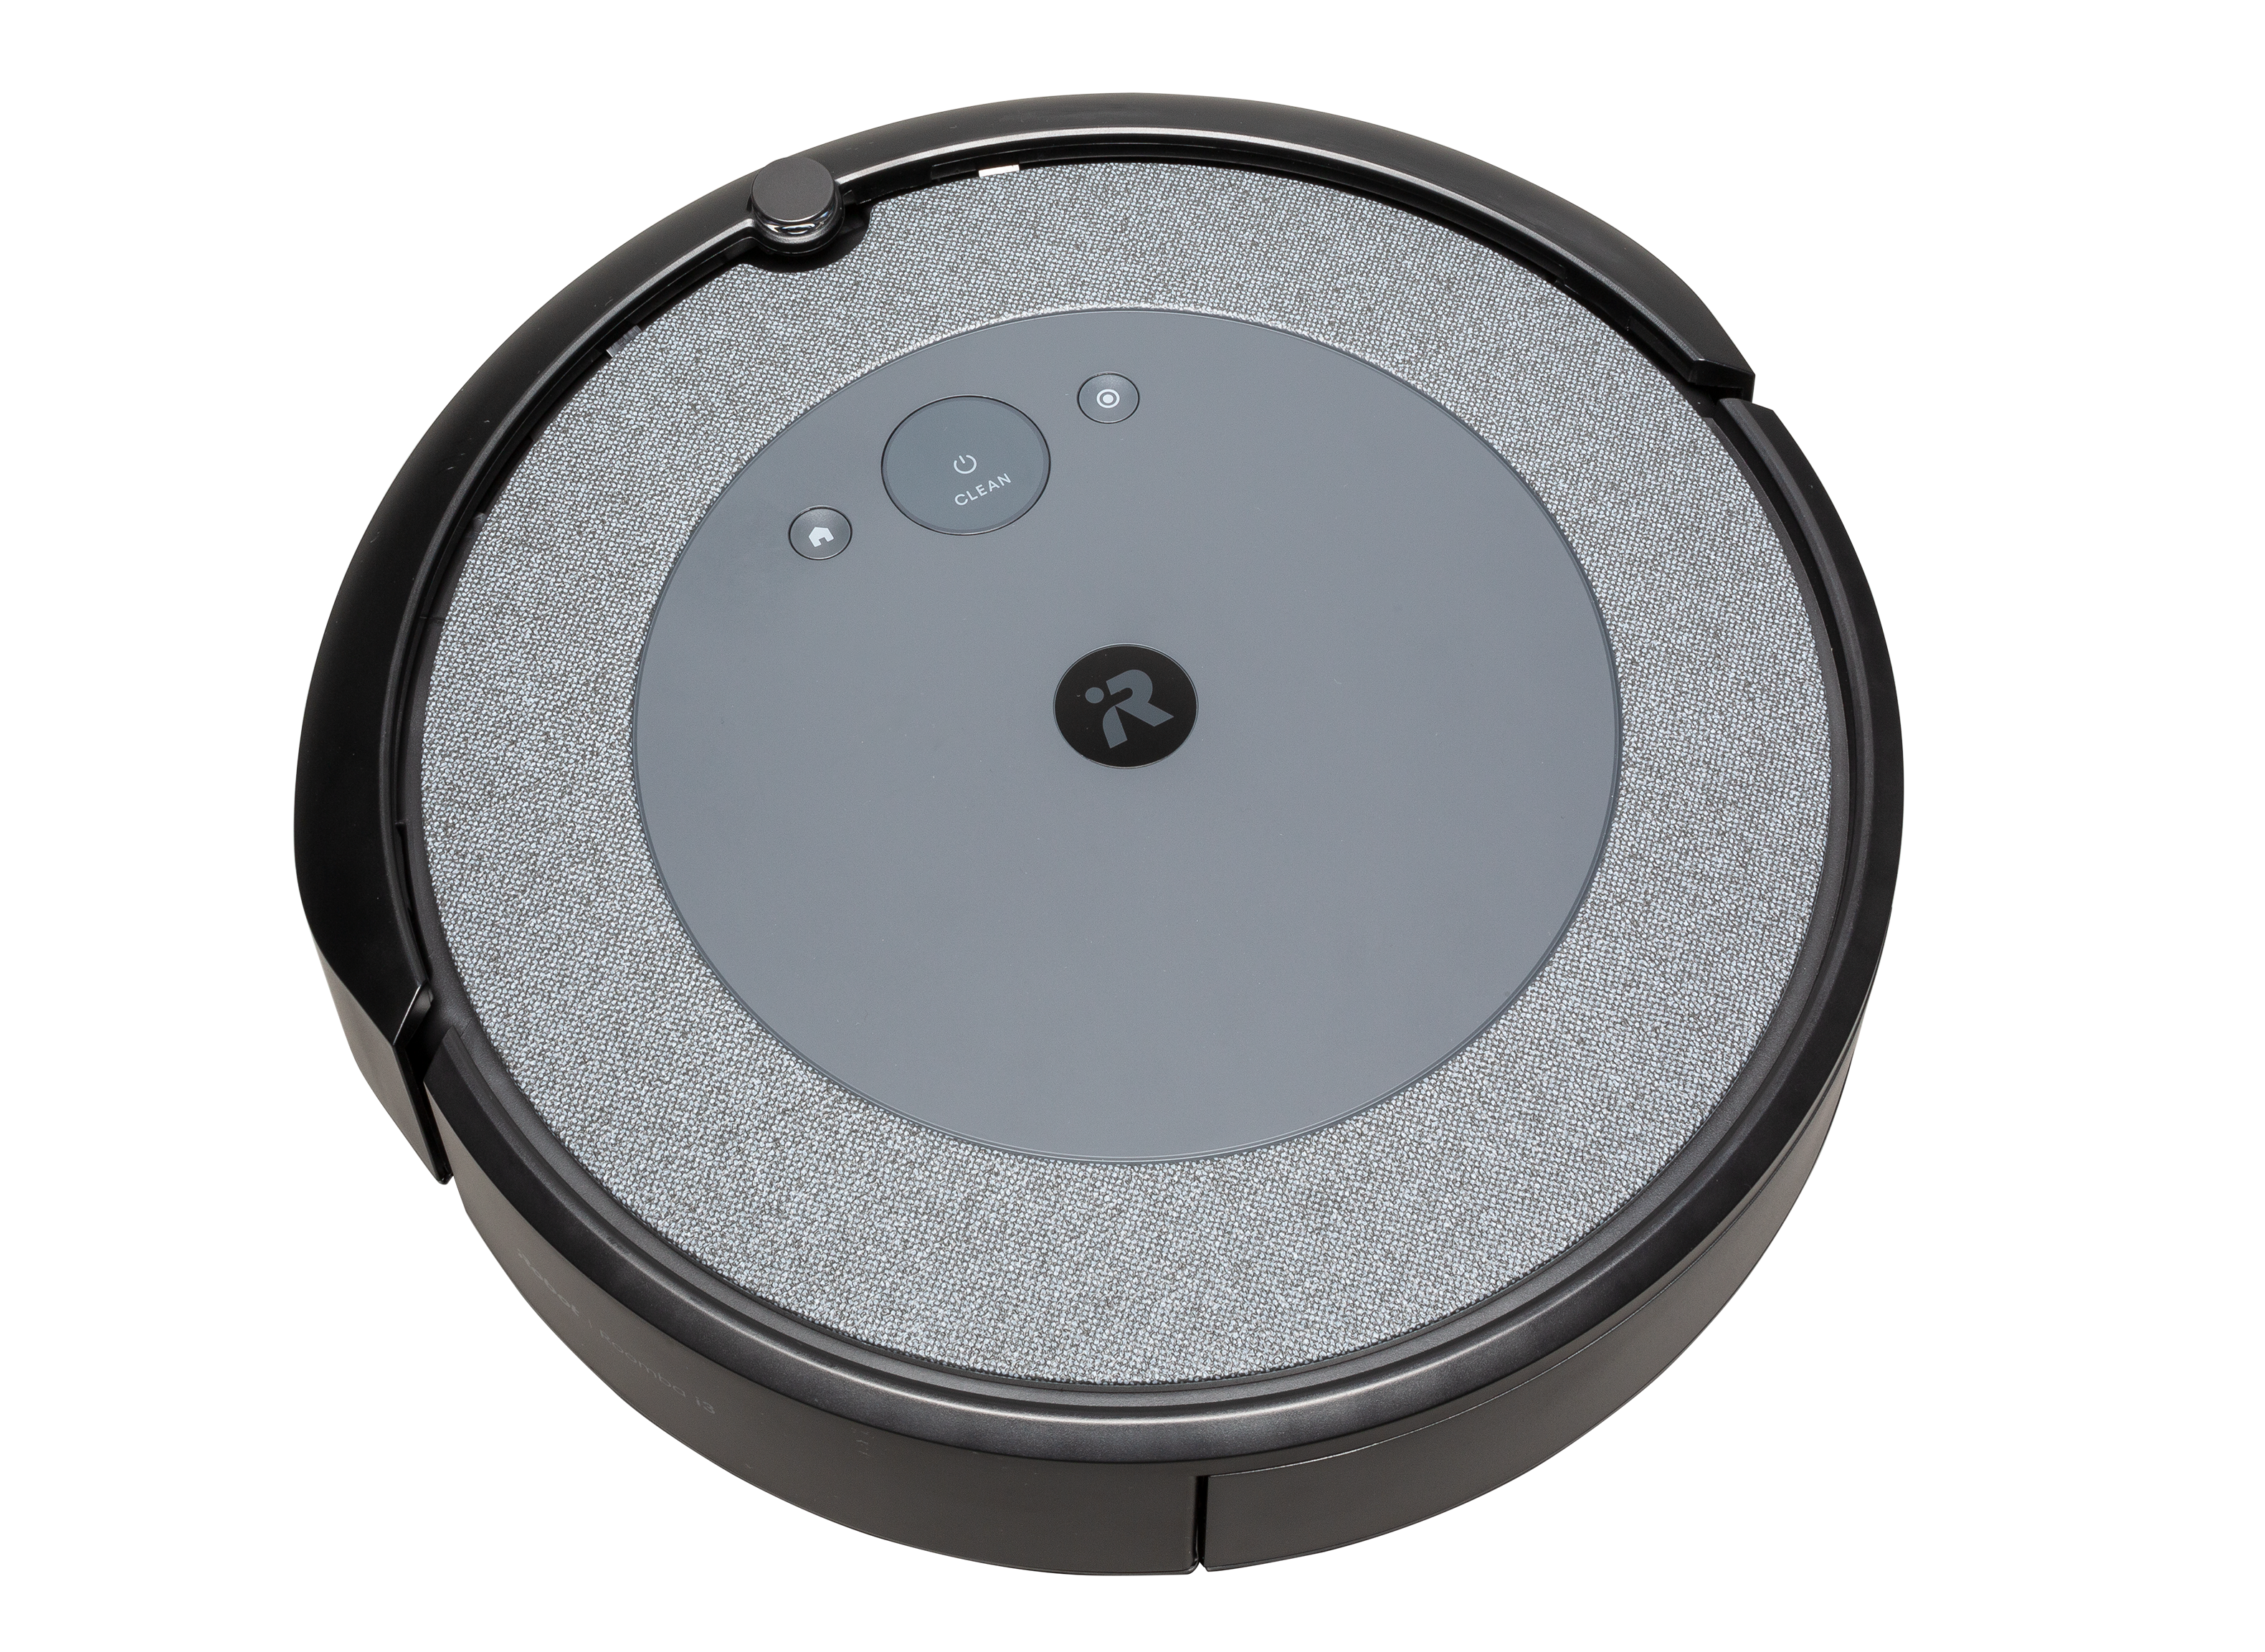 iRobot Roomba i7+ Vacuum Cleaner Review - Consumer Reports